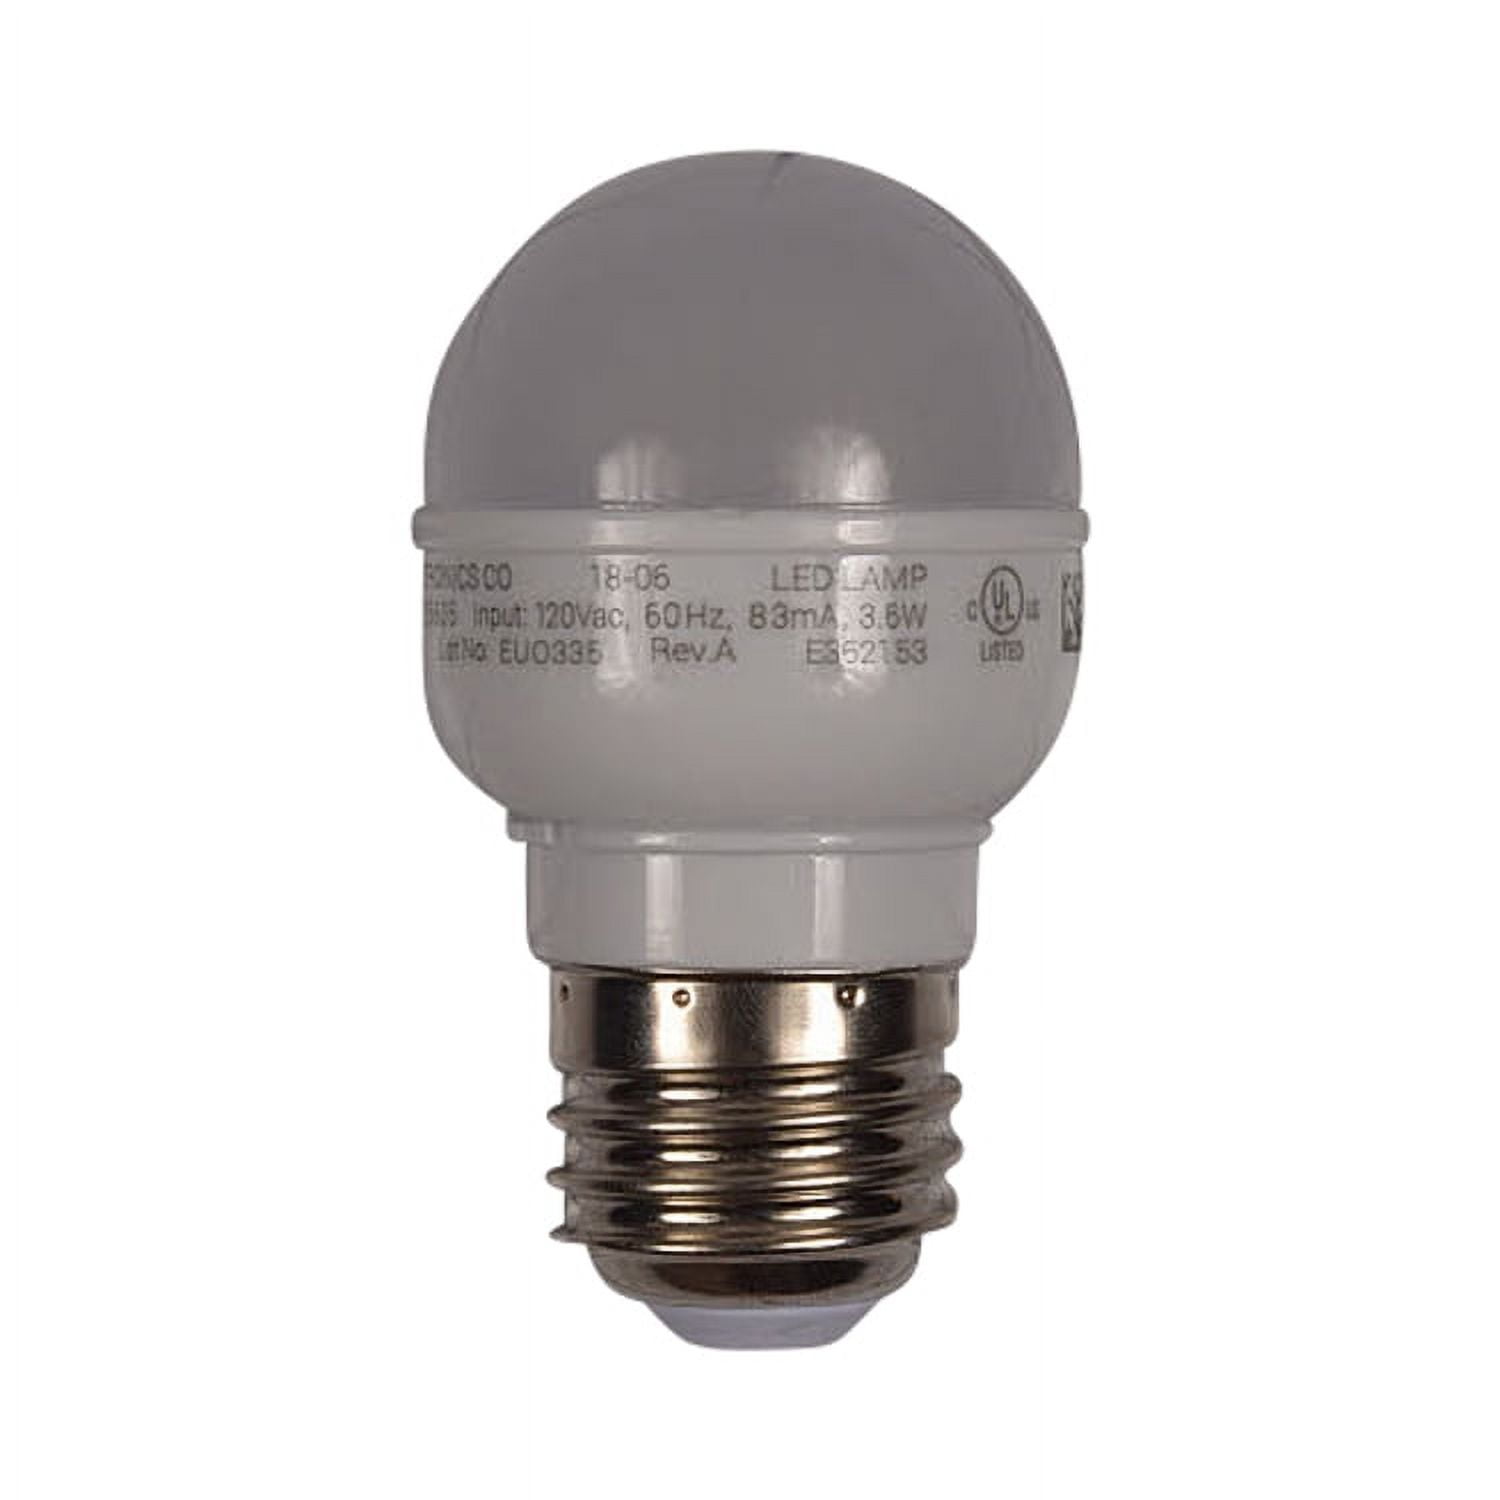 Supplying Demand W11338583 W11043014 Refrigerator Freezer LED Light Bulb  Replacement